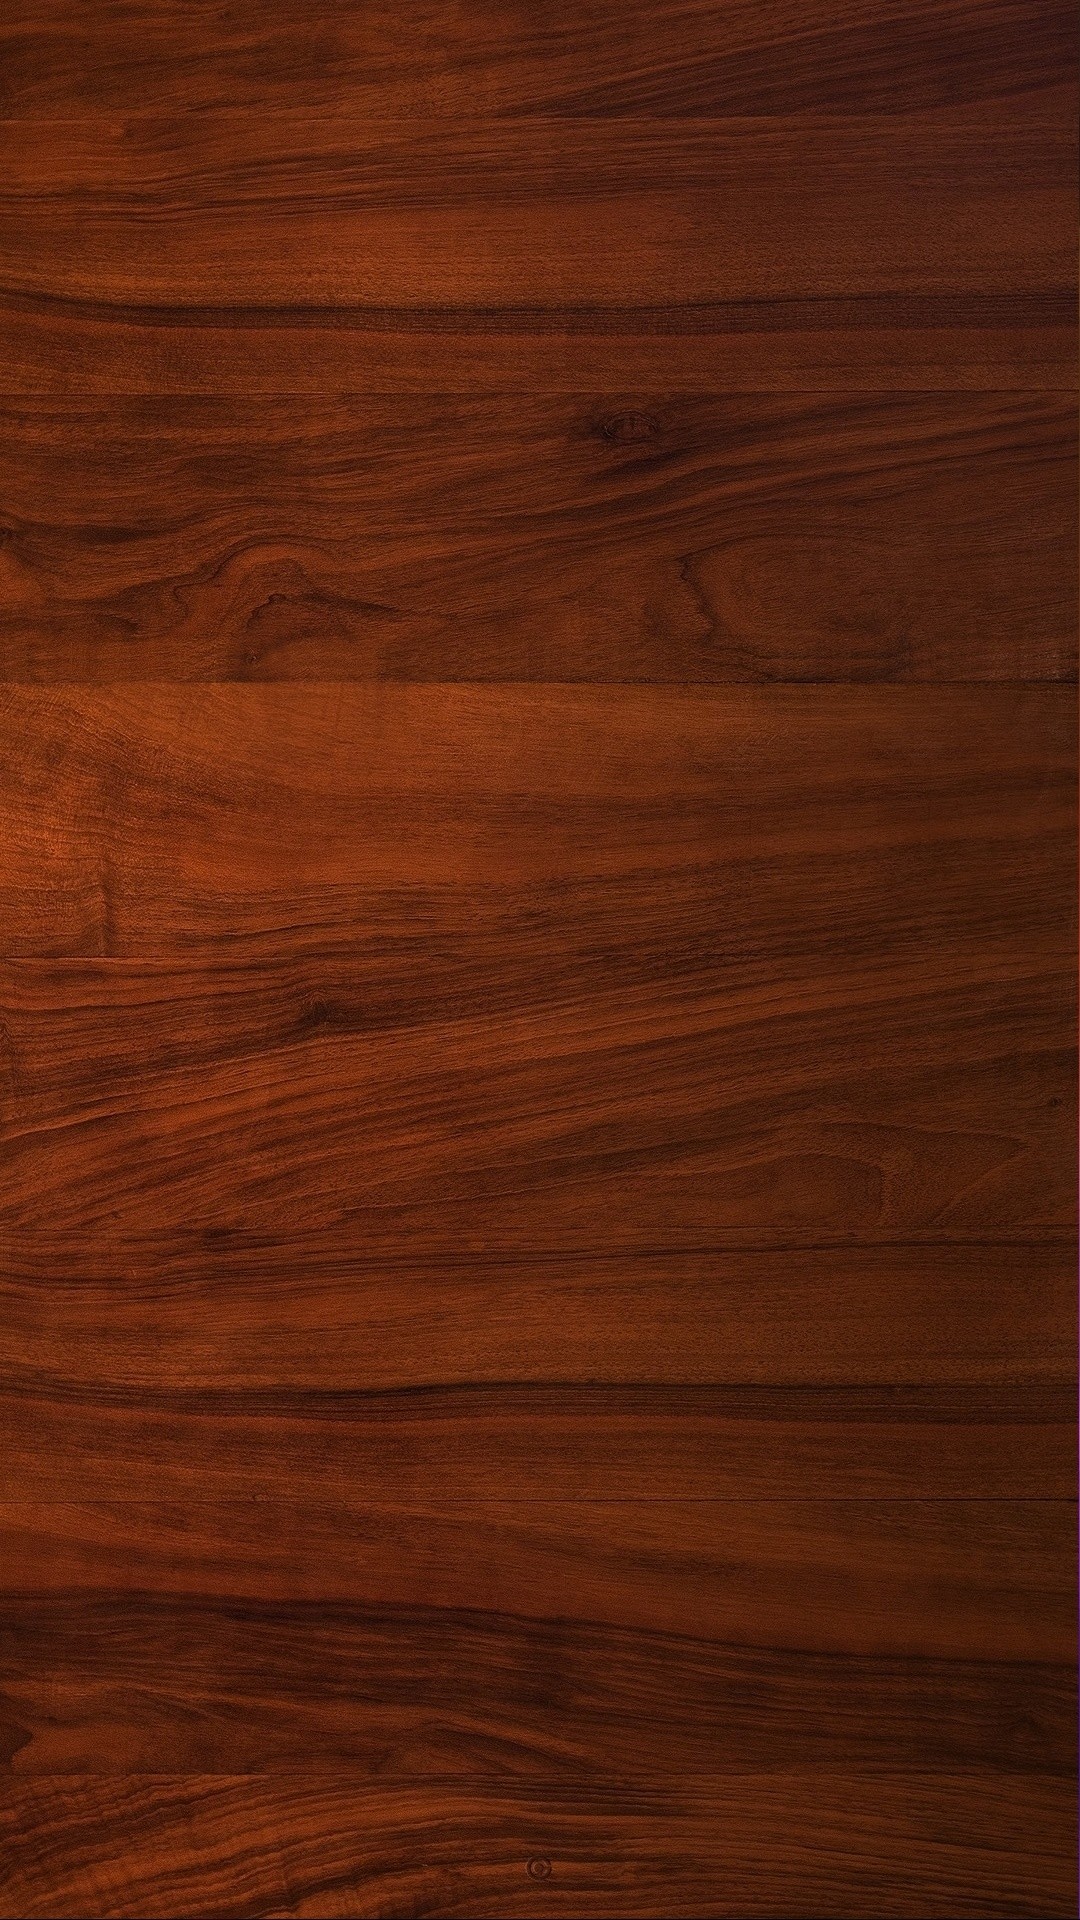 1080x1920, Cherry Wood Pattern Texture Iphone 6 Plus - Wood Pattern Wallpaper Hd - HD Wallpaper 